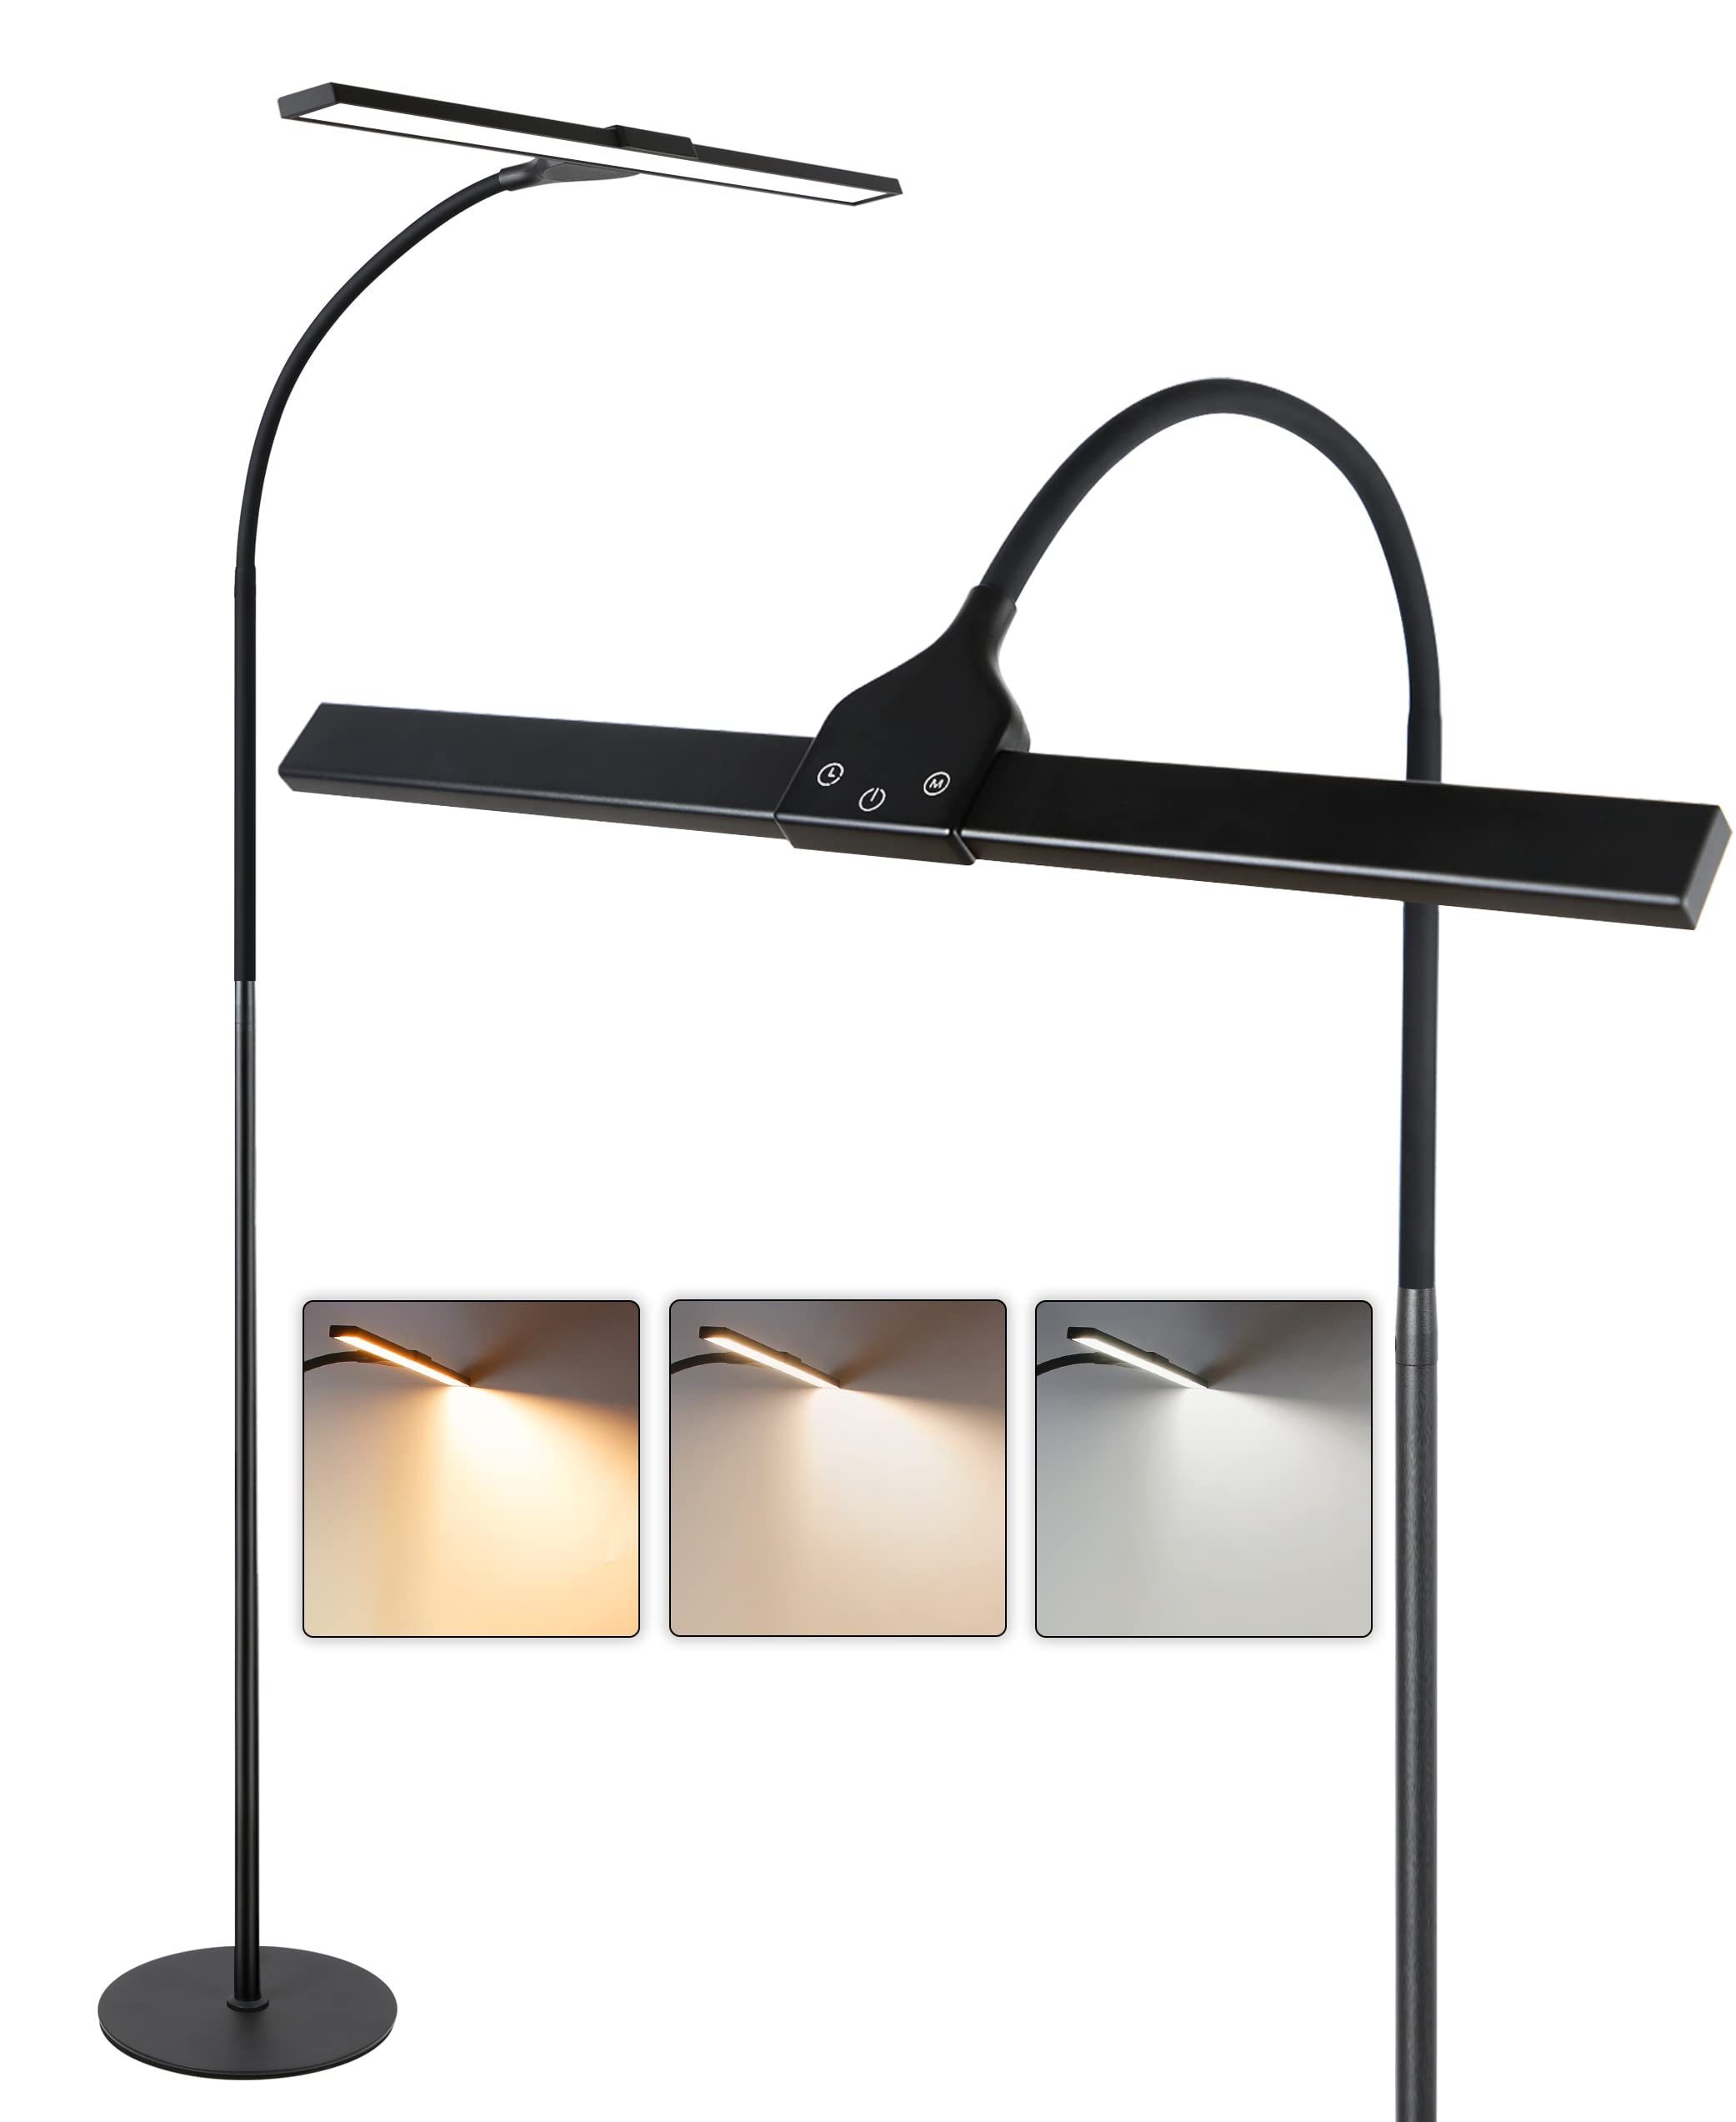 ZMH LED Stehlampe Leselampe fest Deko Timer dimmbar, mit Touch LED Beleuchtung Modern integriert, schwarz Büro